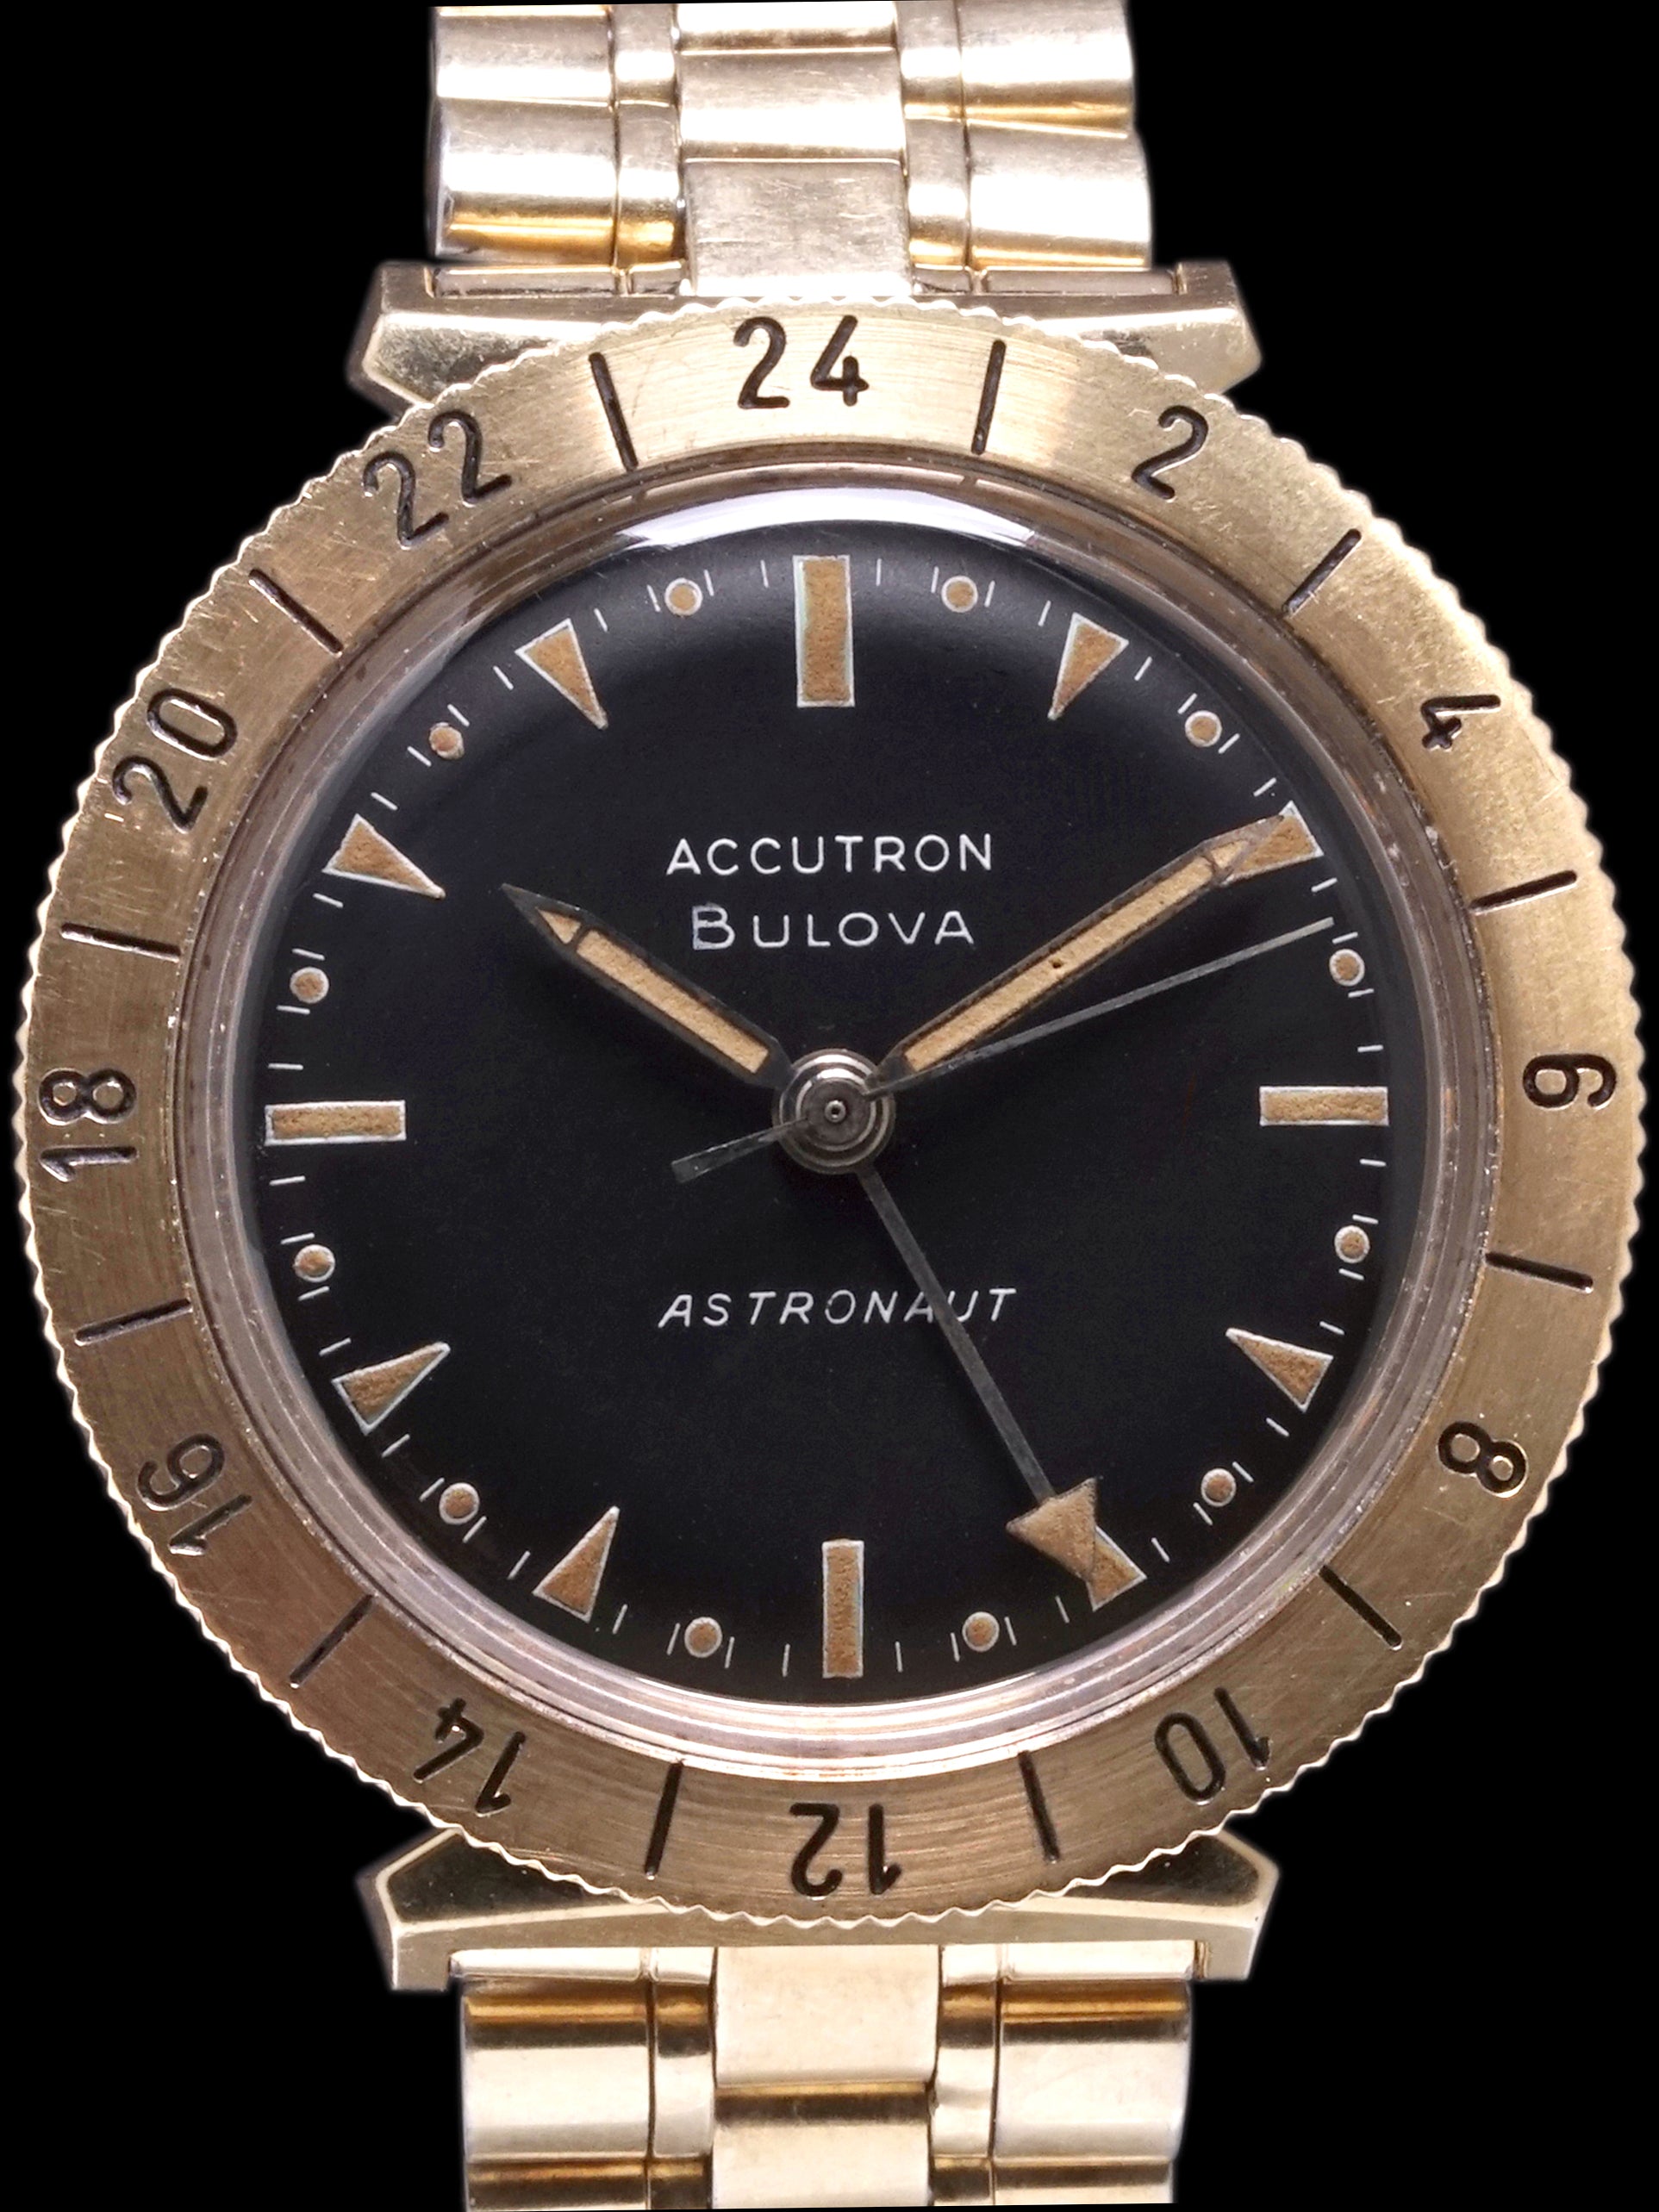 1965 Gold Bulova Accutron Astronaut GMT